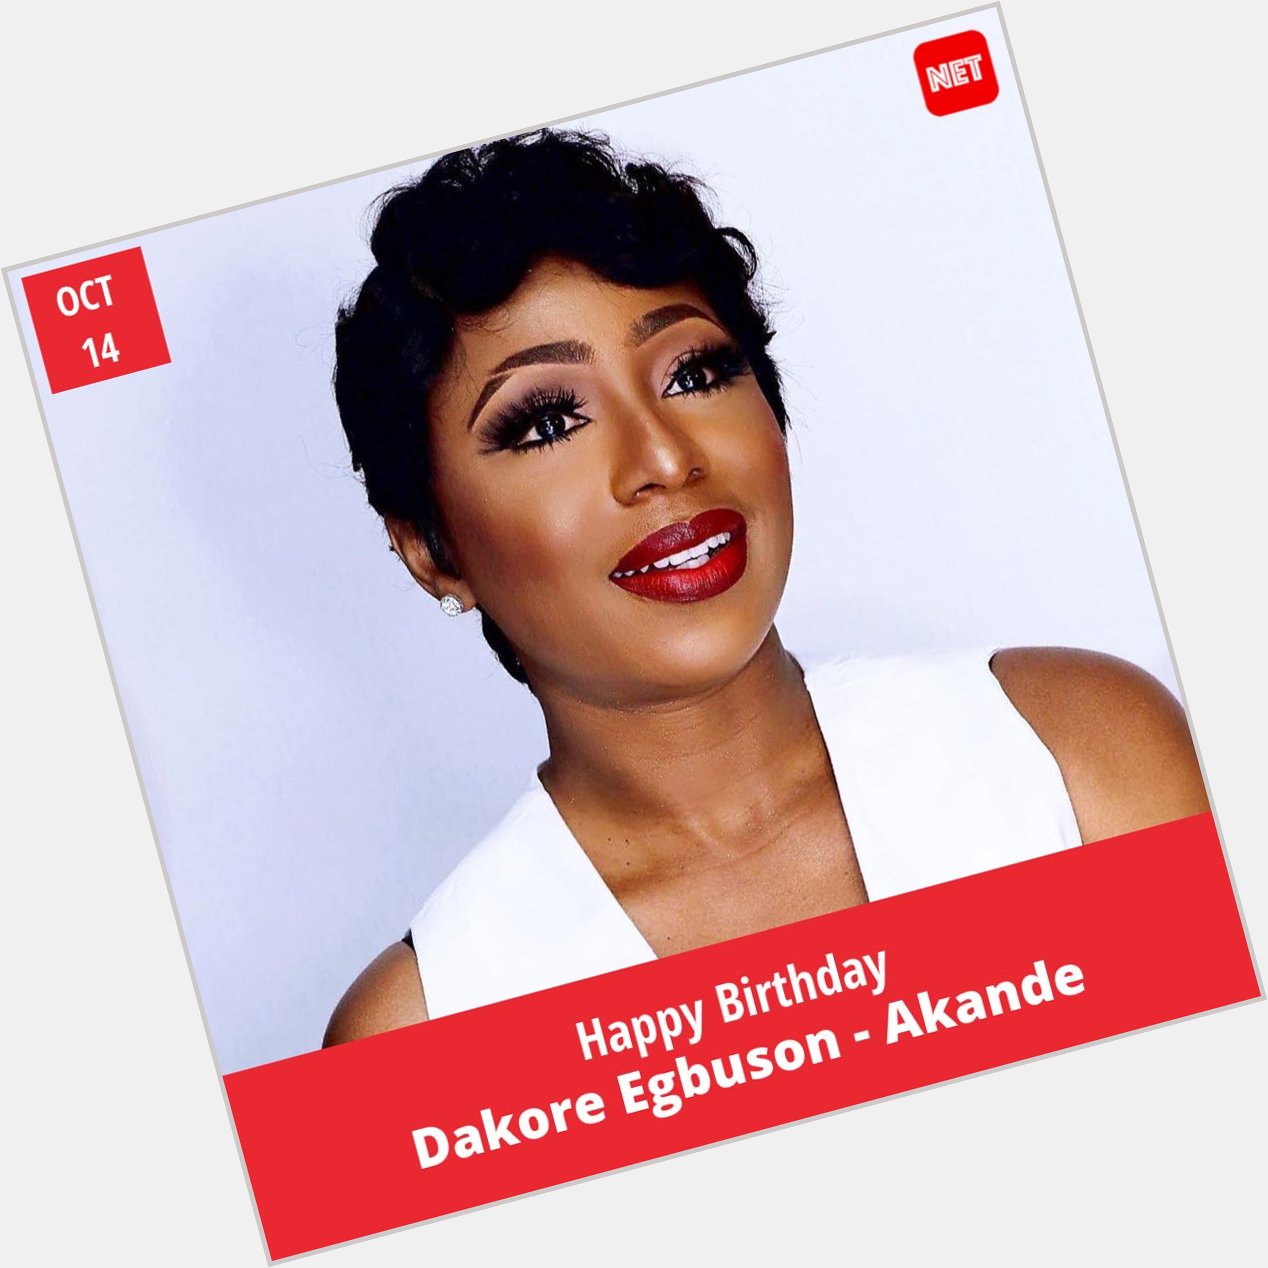 Happy Birthday Dakore Egbuson-Akande!
Wishing you long life, peace, joy, love and plenty money! 